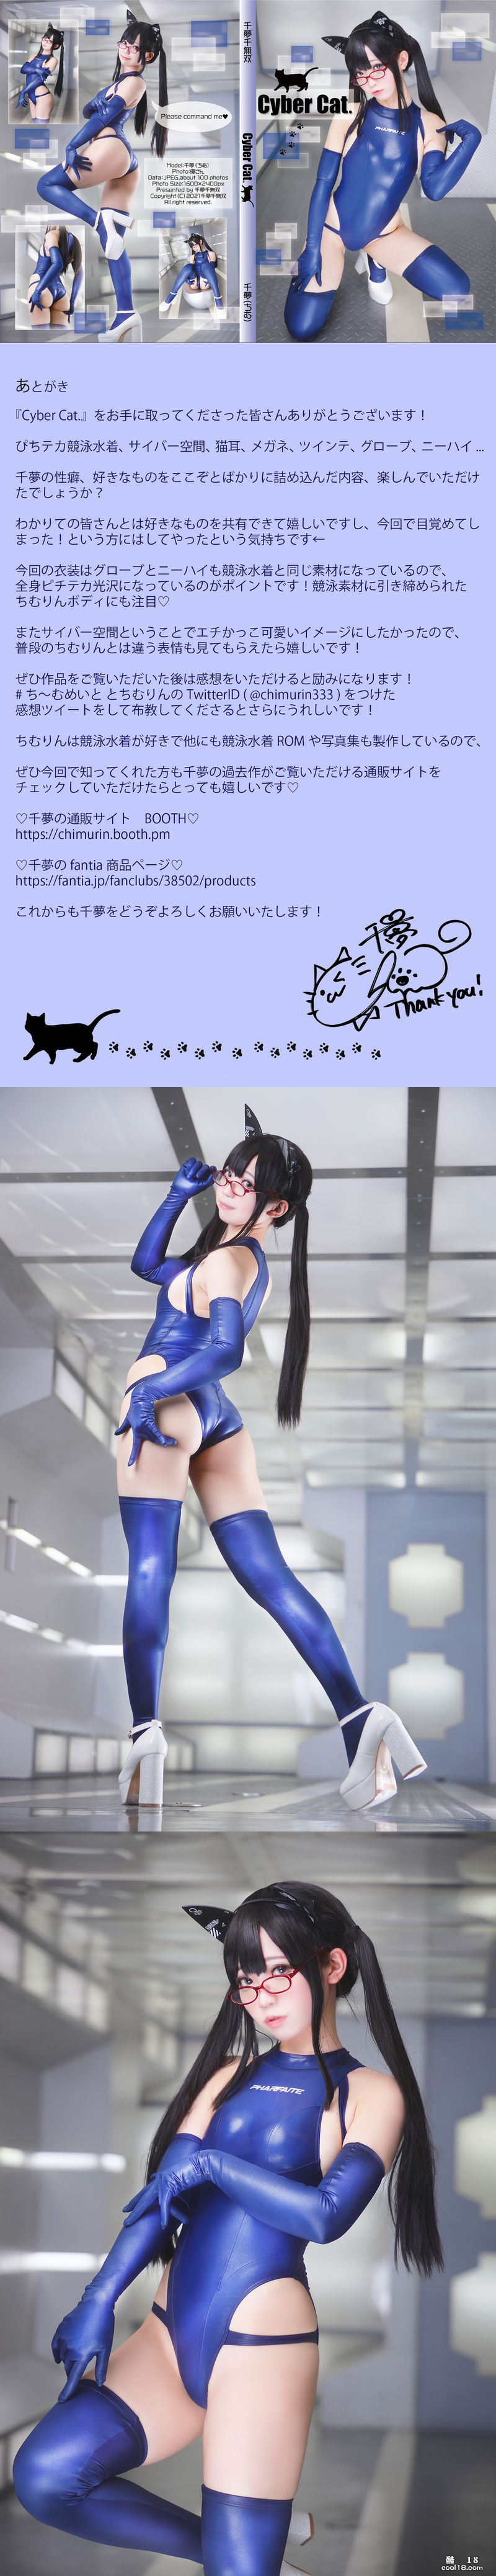 c_1644940248_34609 [Cosplay] Chimu 千夢 & Cyber Cat. 02160 cosplay 